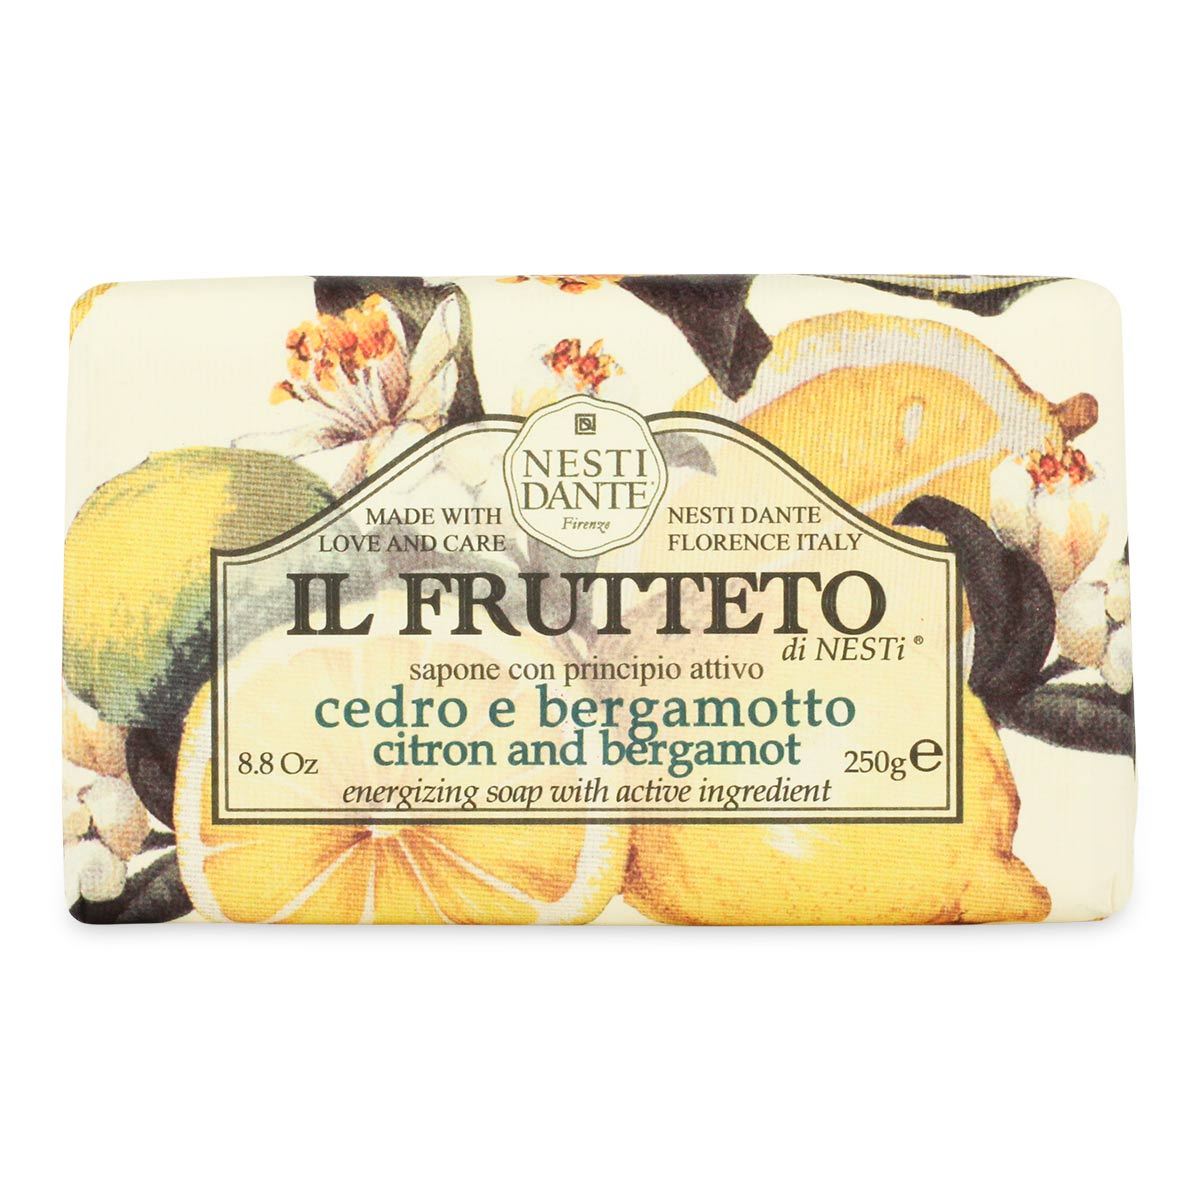 Primary image of Citrus + Bergamot Soap